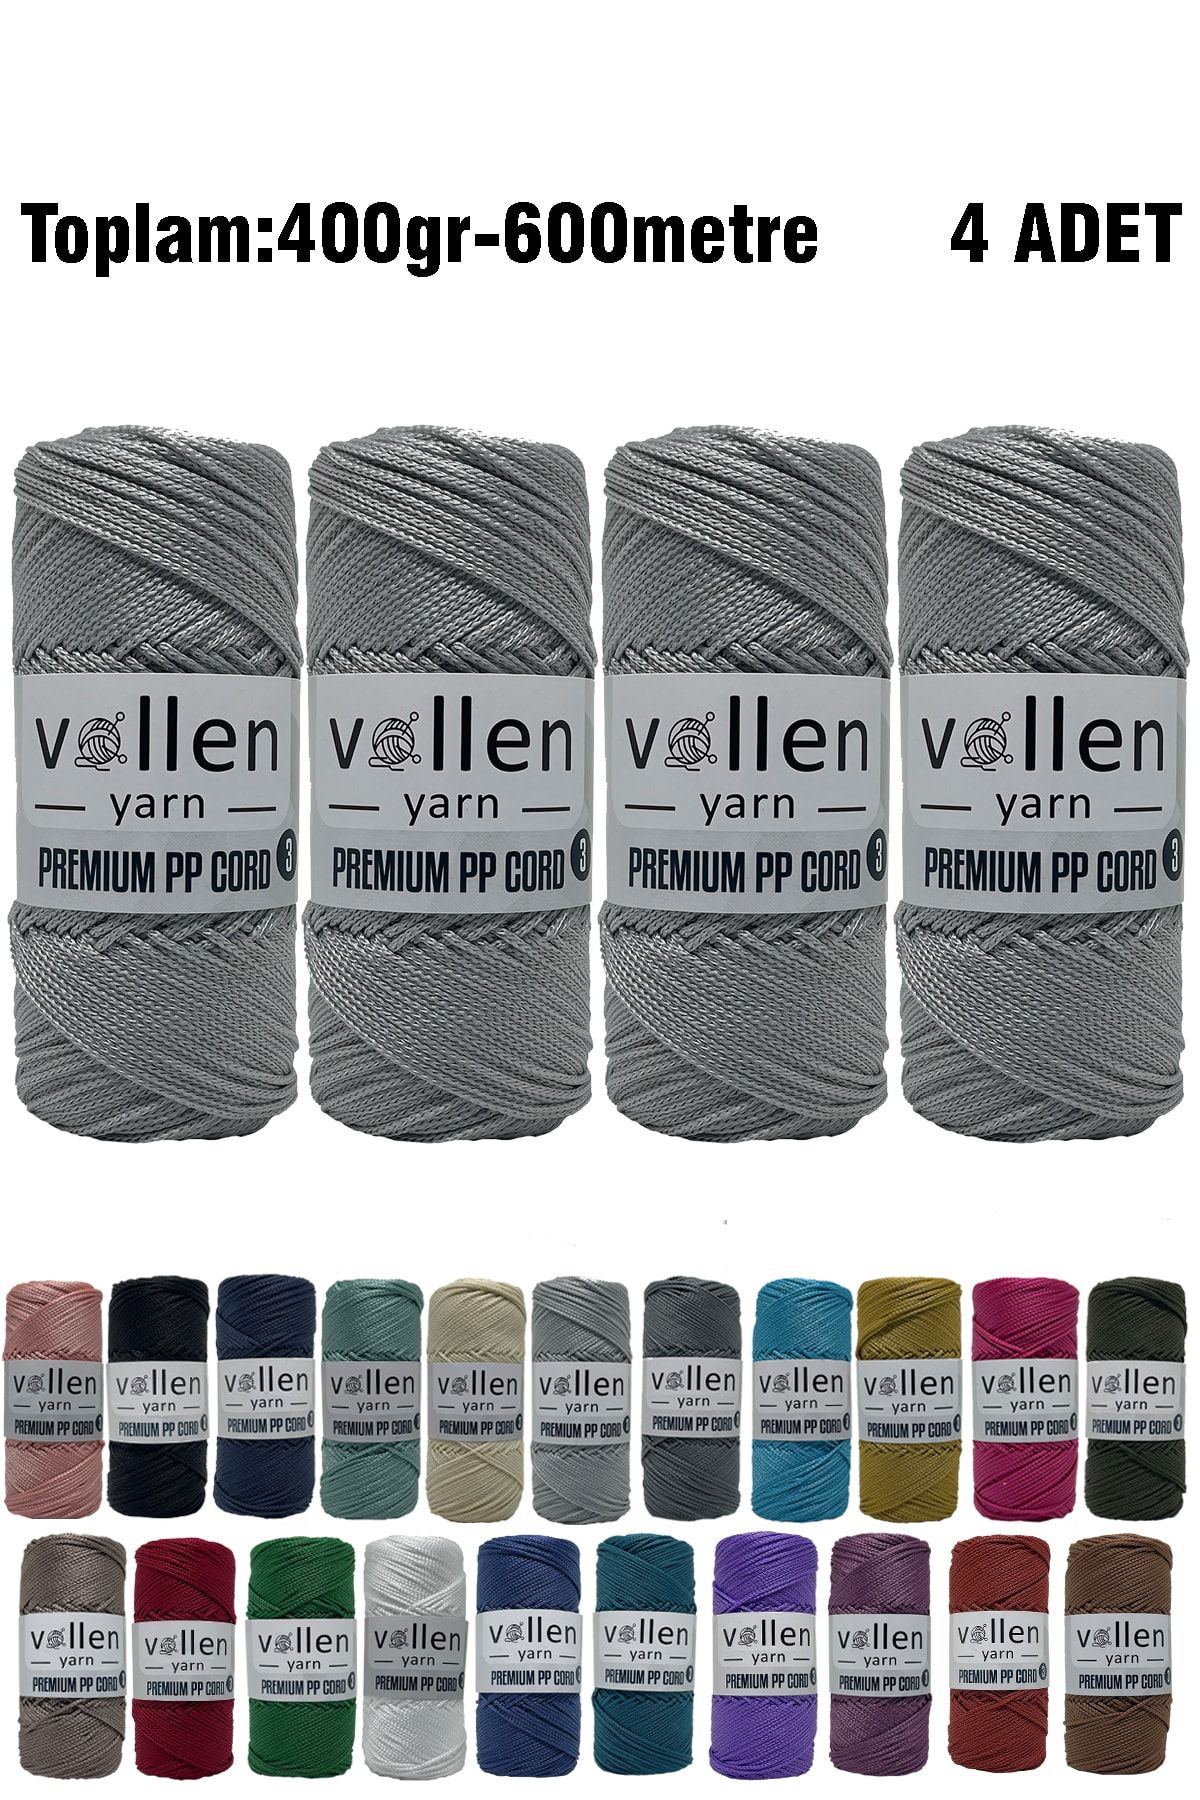 vollen yarn 600m Polyester Makrome Ipi, Supla Ipi, Çanta Ipi, Bileklik Ipi,makrame,açık Gri 1.5mm-400gr